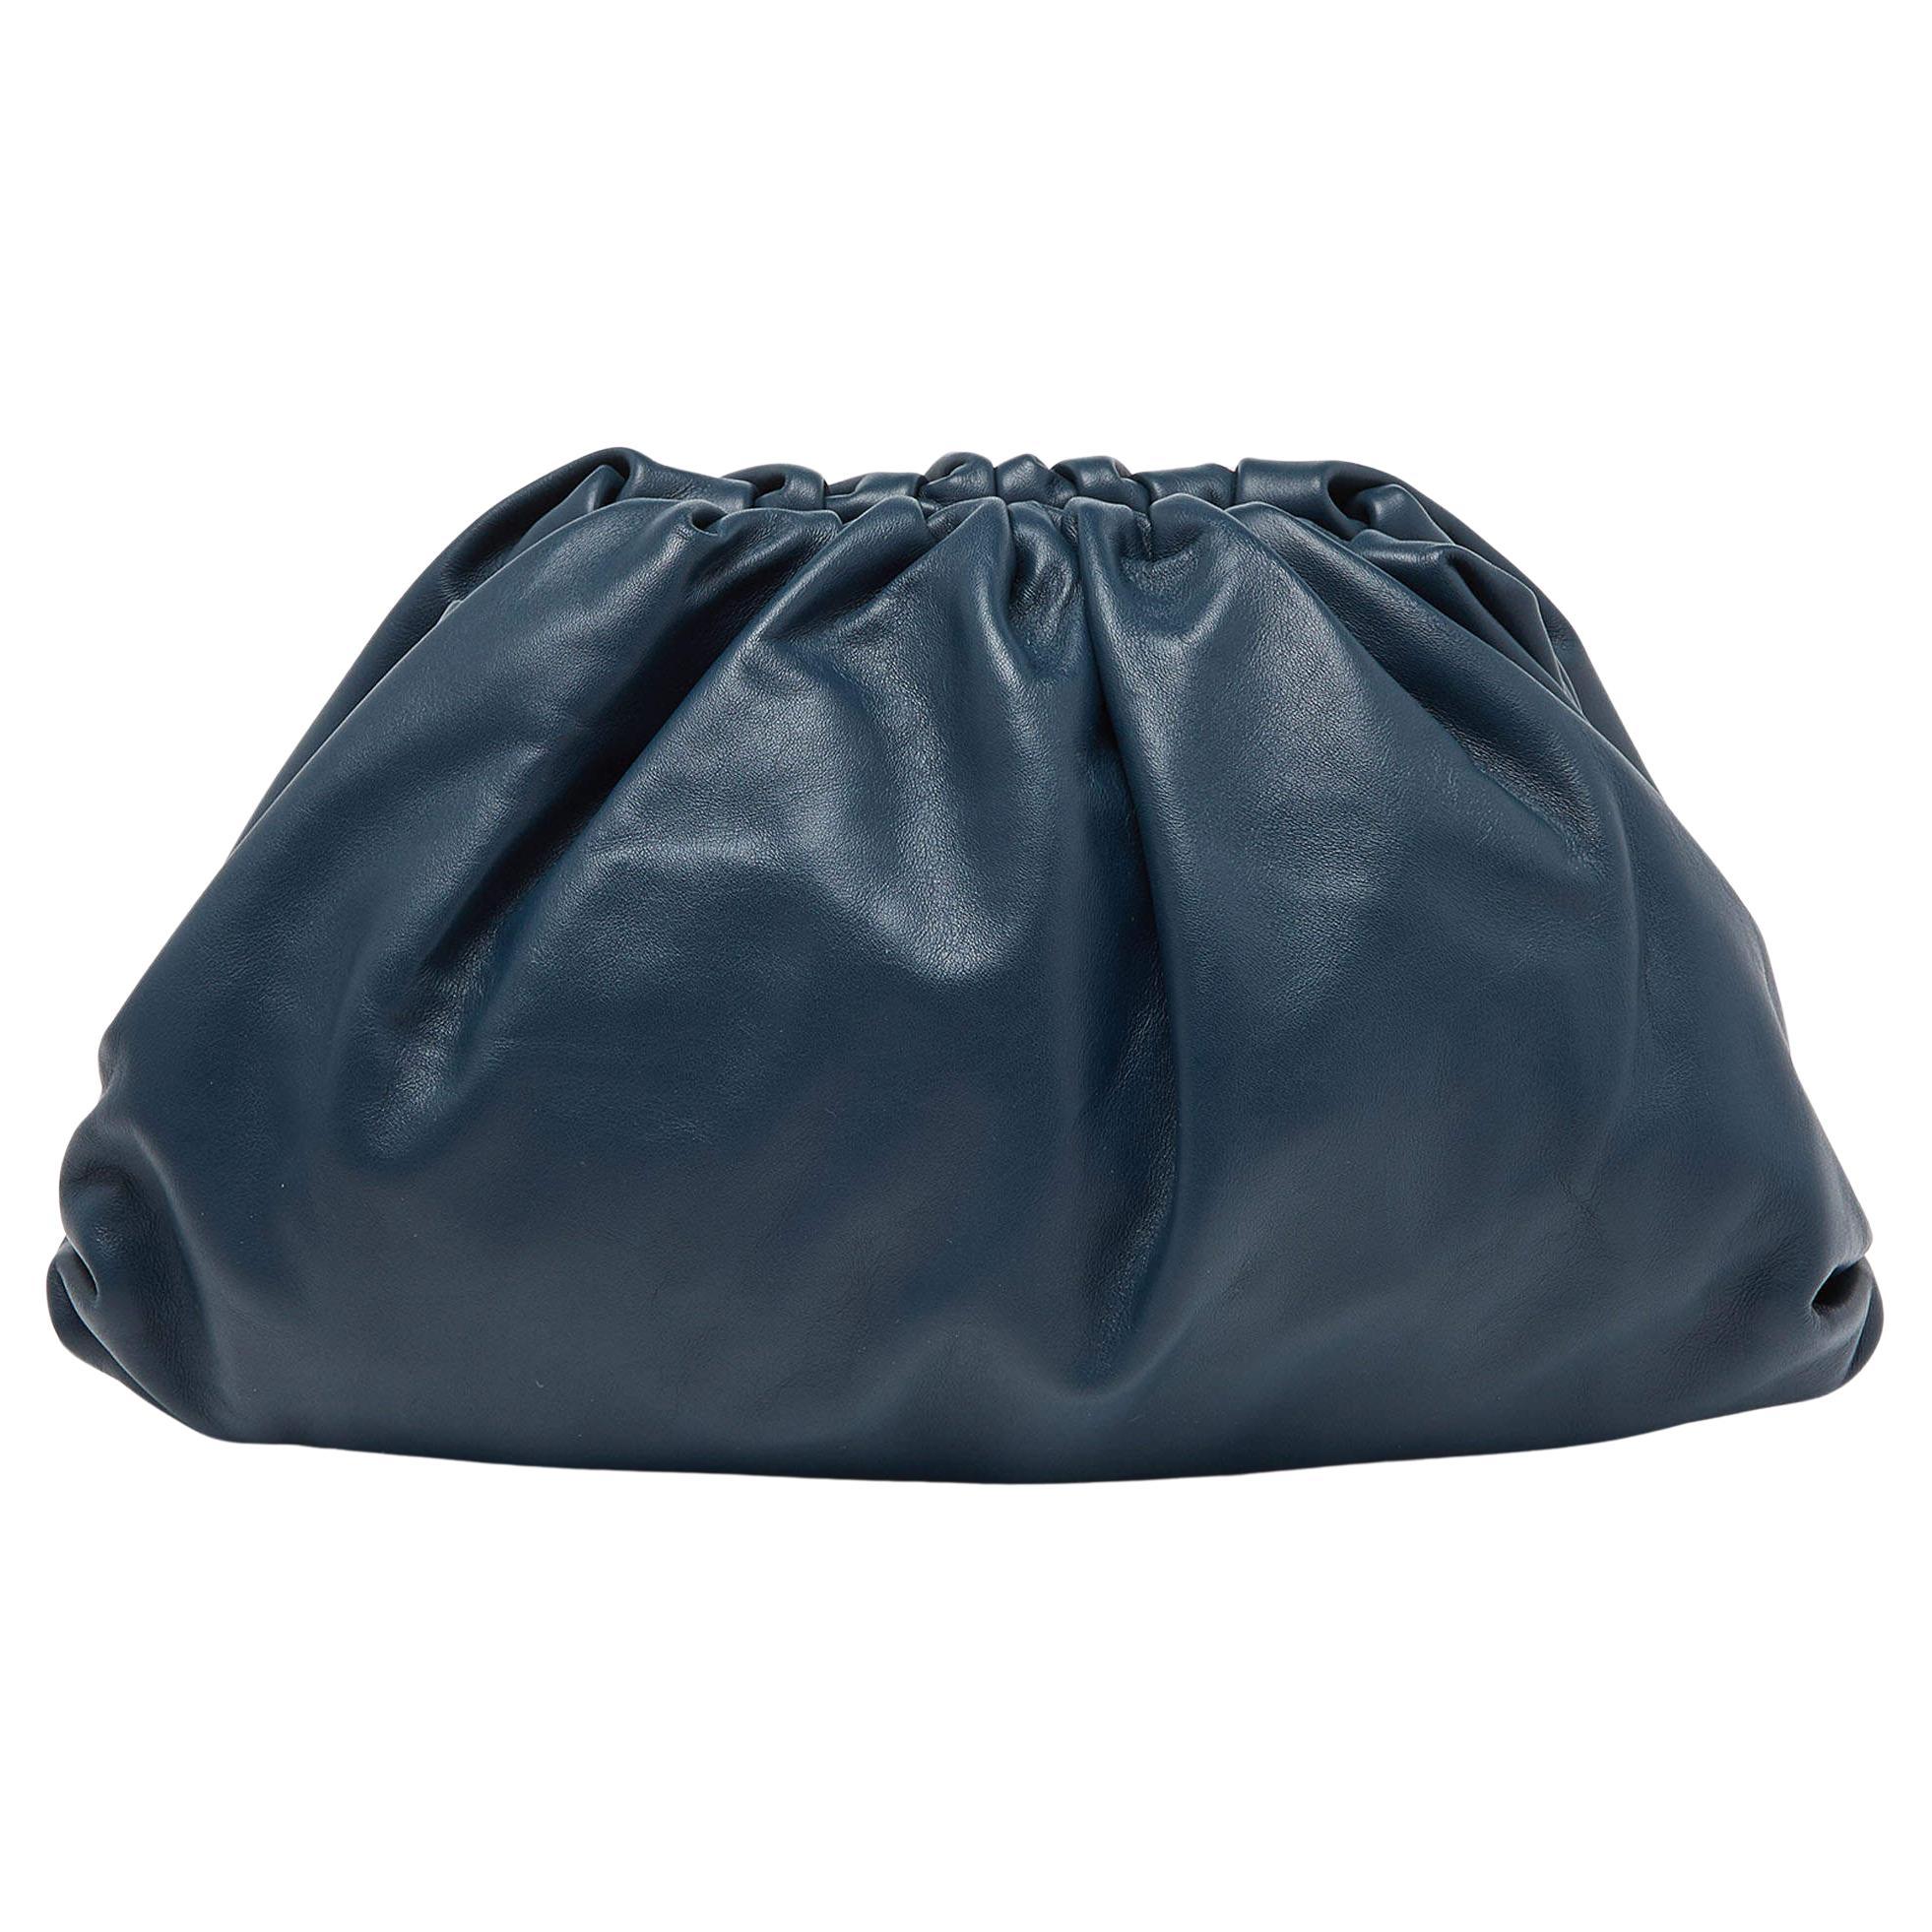 Bottega Veneta Teal Blue Leather The Pouch Clutch For Sale